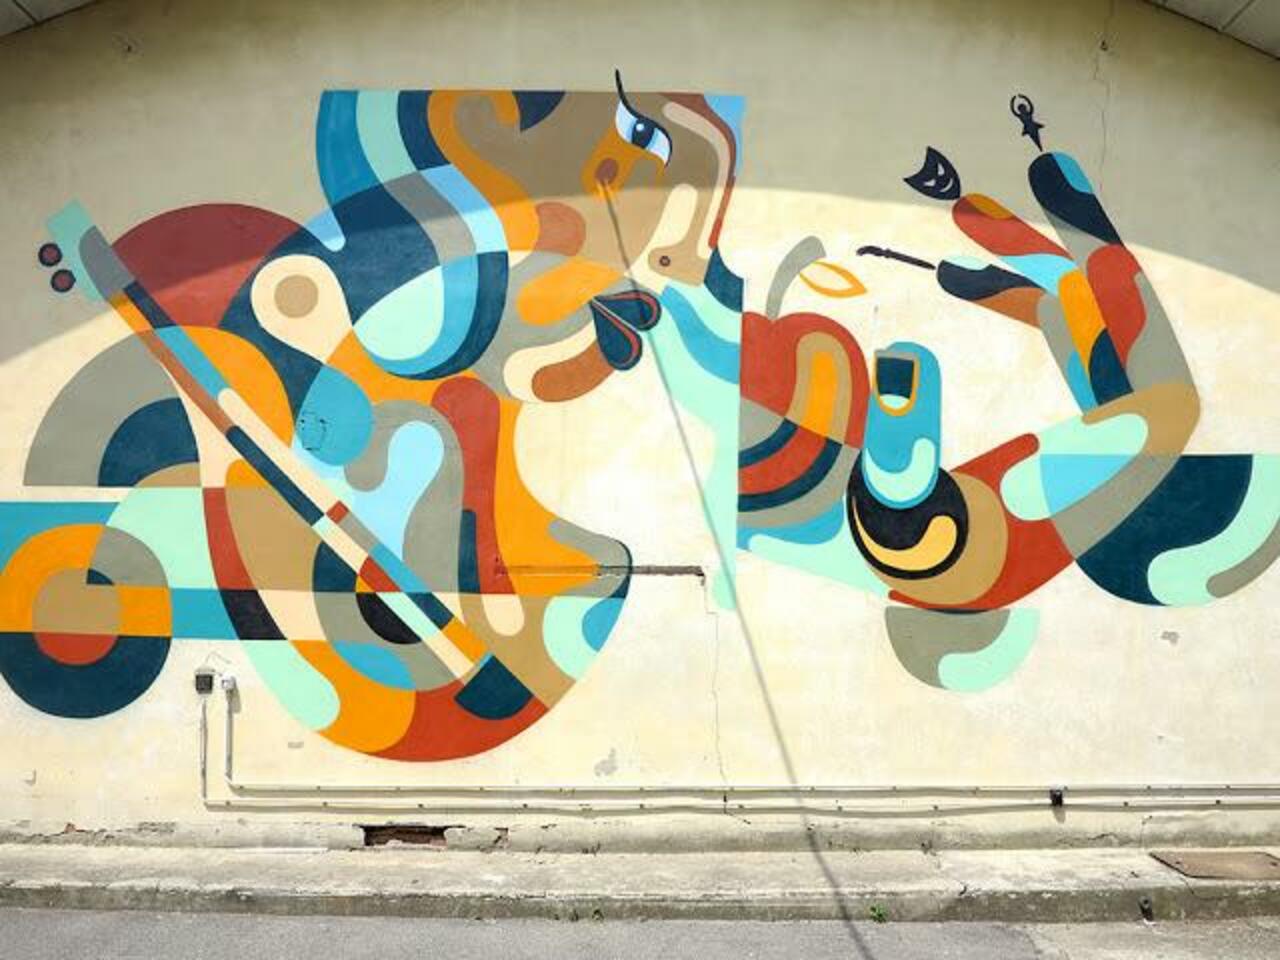 Mural by Reka in Milan, Italy

#streetart #urbanart #mural #art #graffiti http://t.co/7GCnGHEU5H